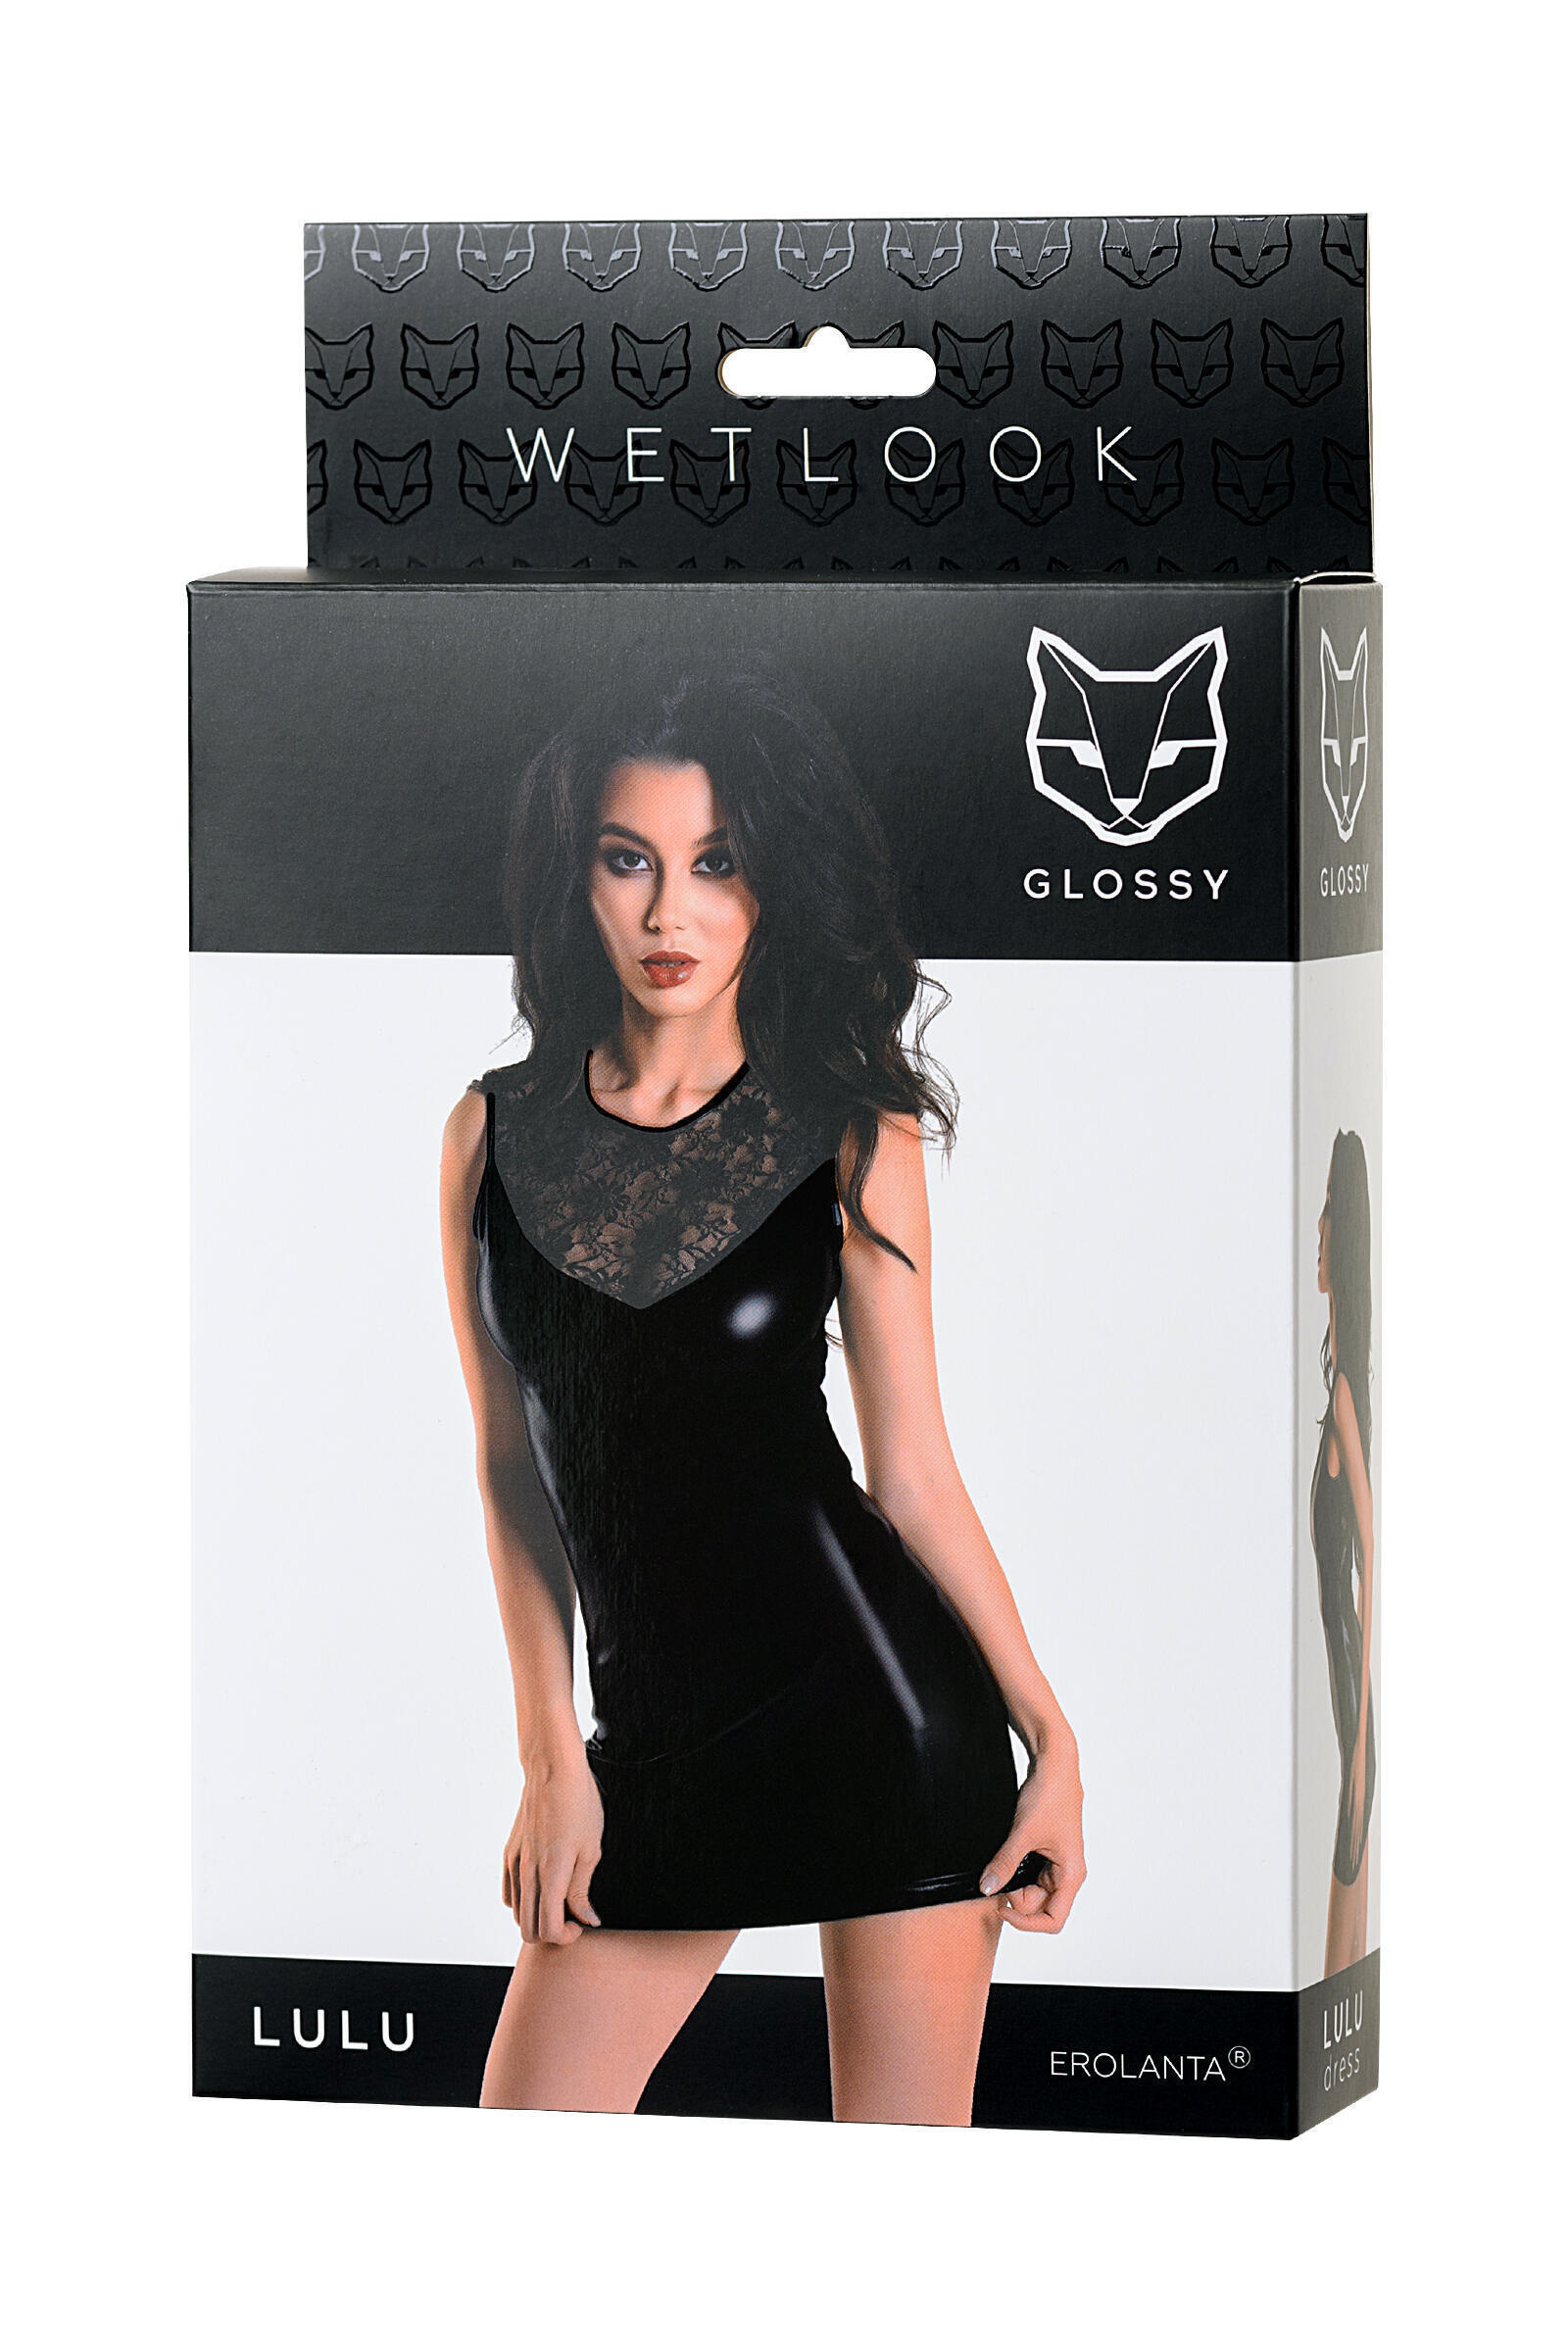 Платье Erolanta Glossy Lulu из материала Wetlook, черное, S